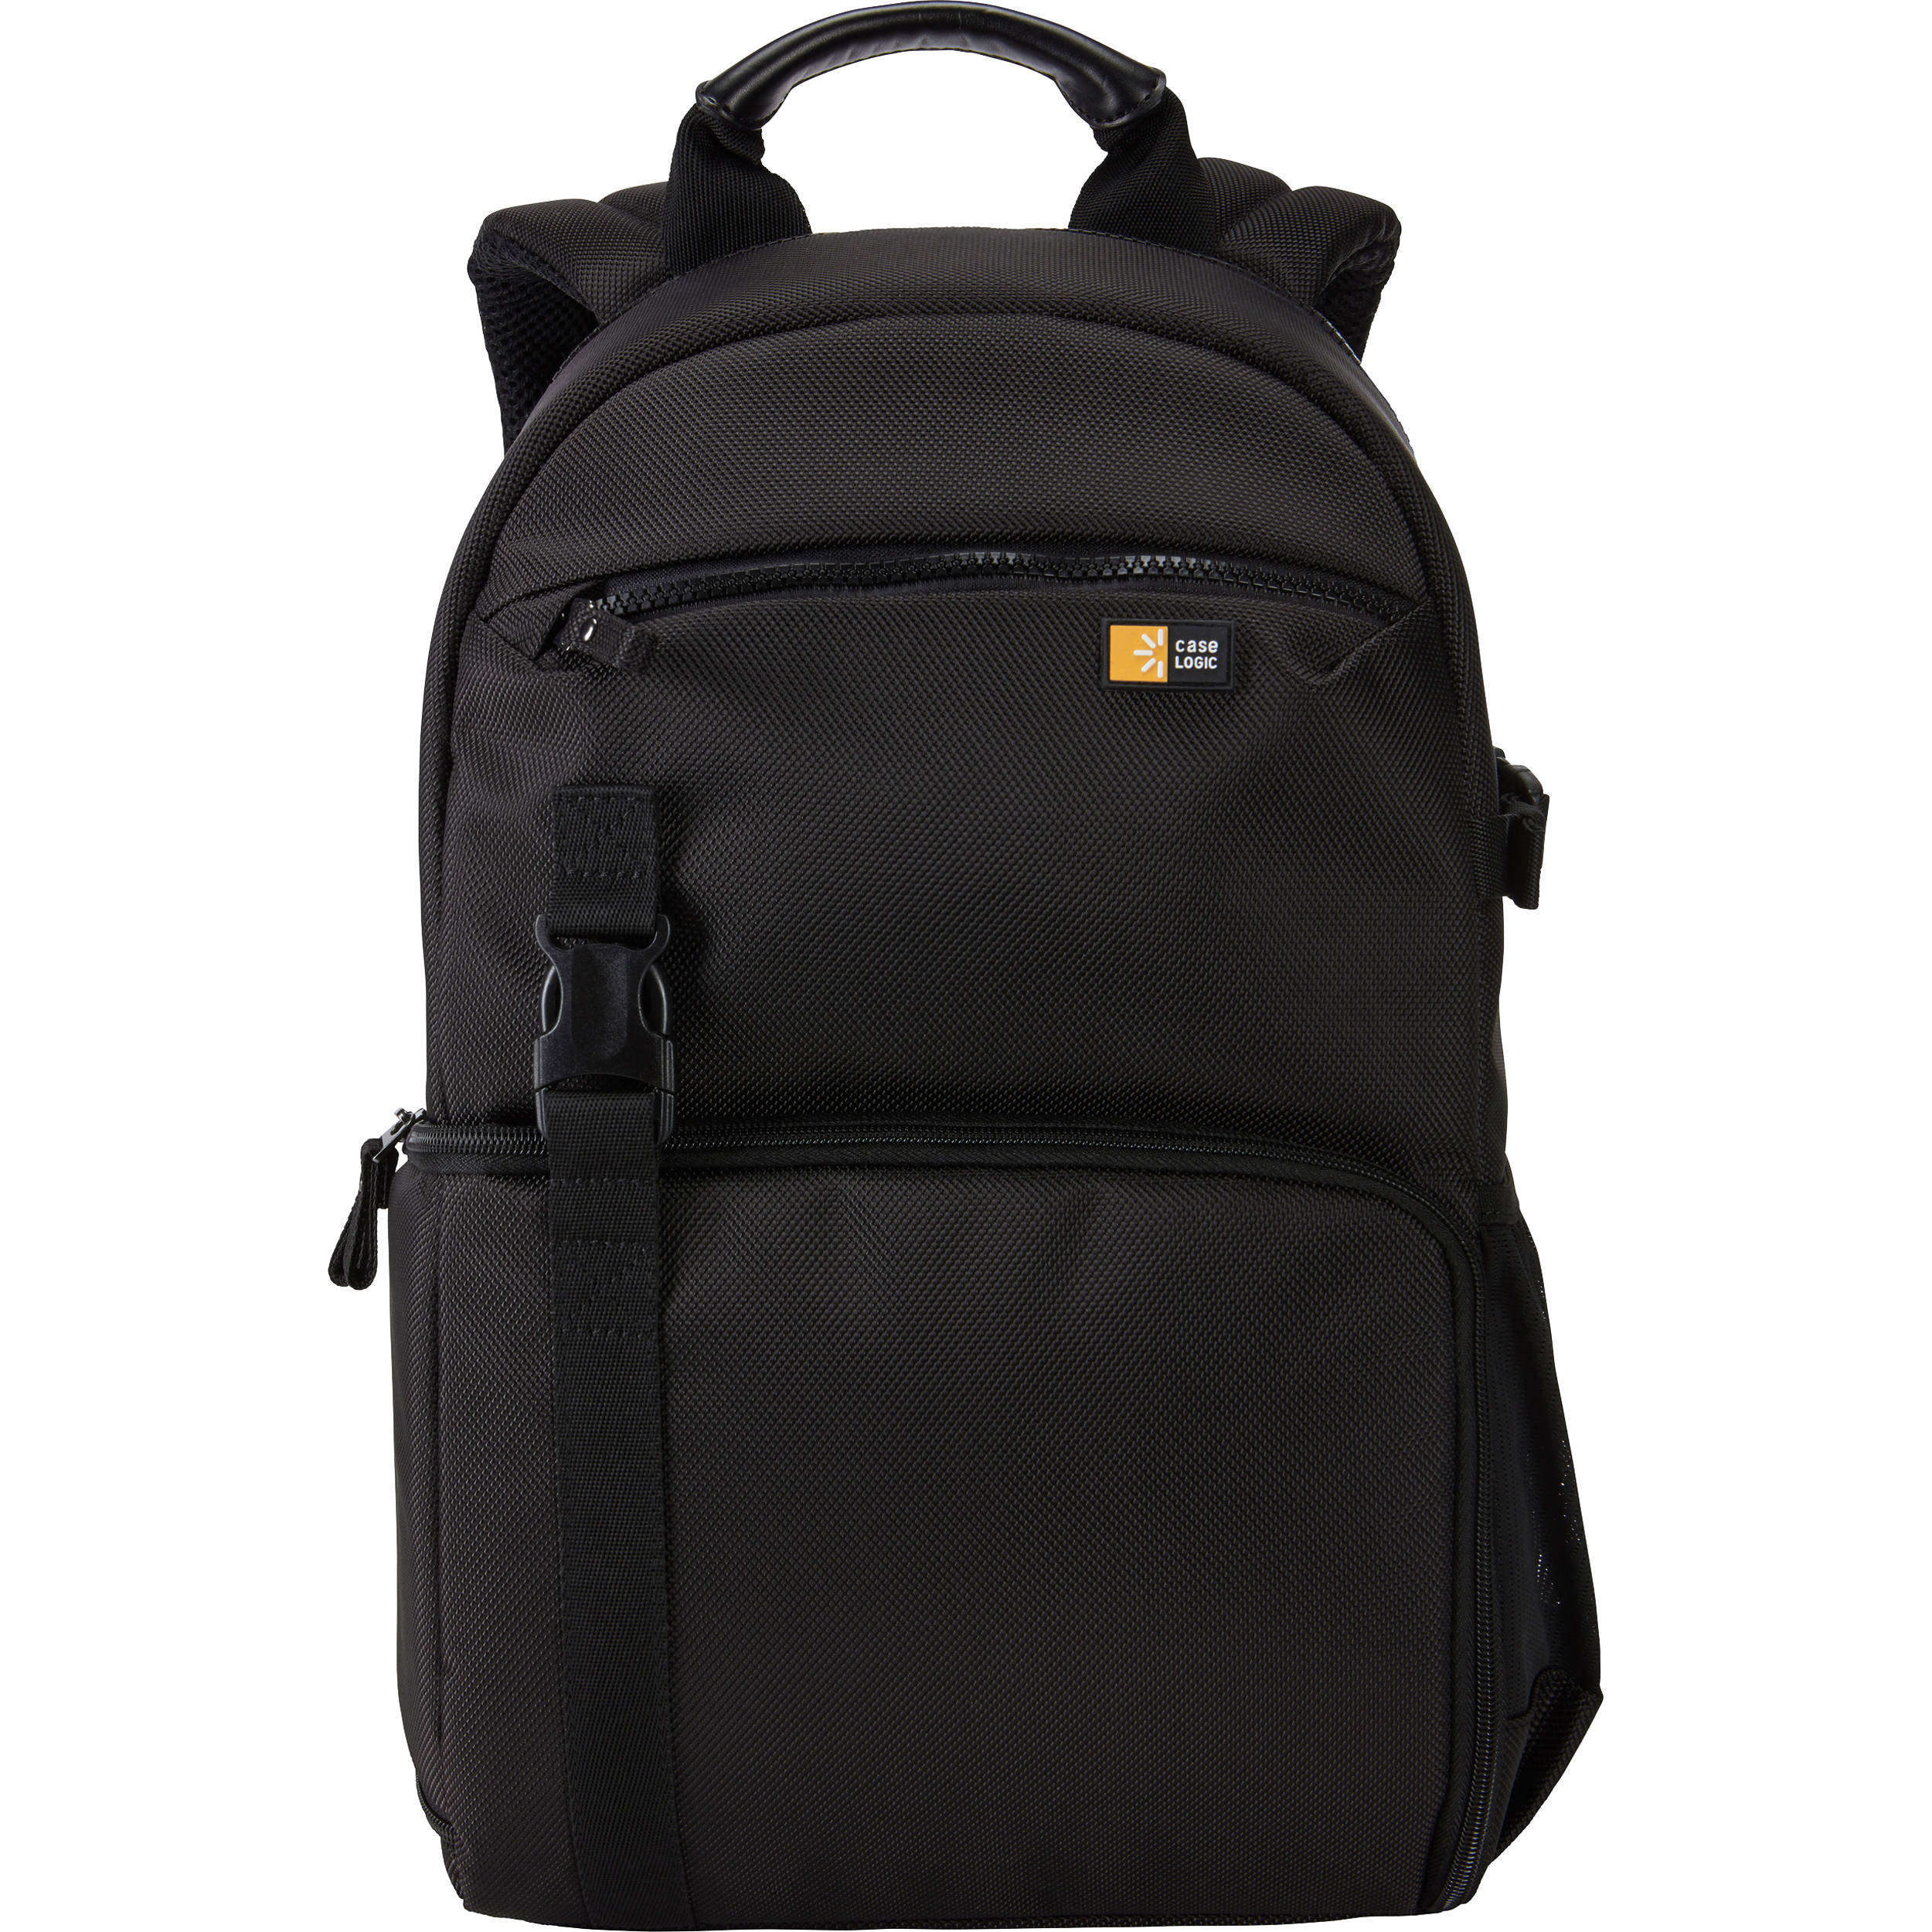 case logic bryker camera backpack